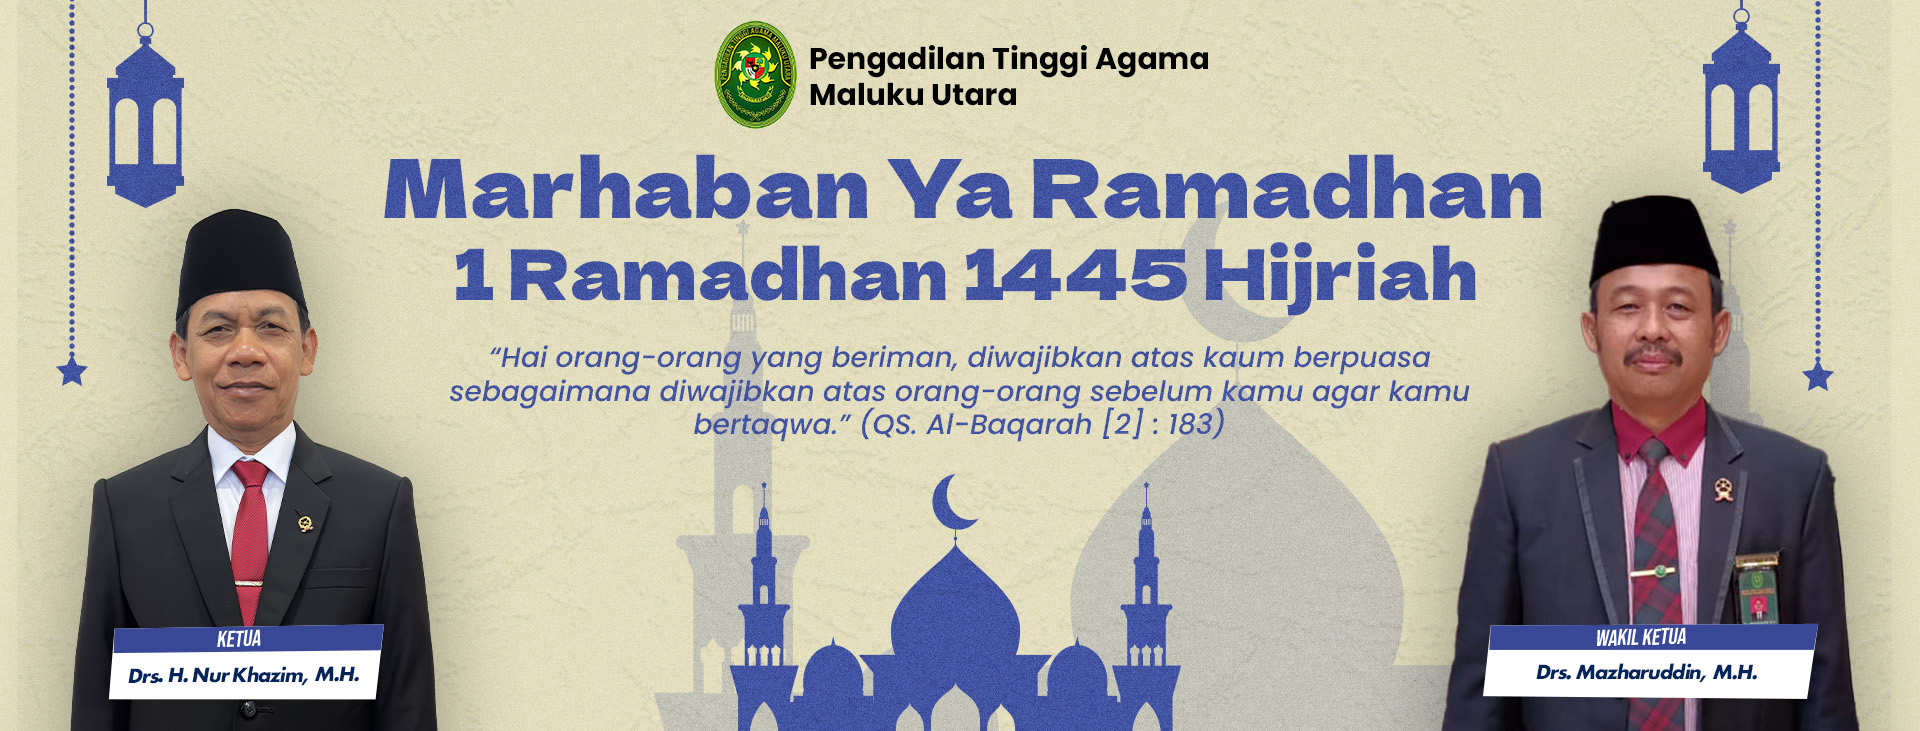 Ucapan Ramadhan 1445 H